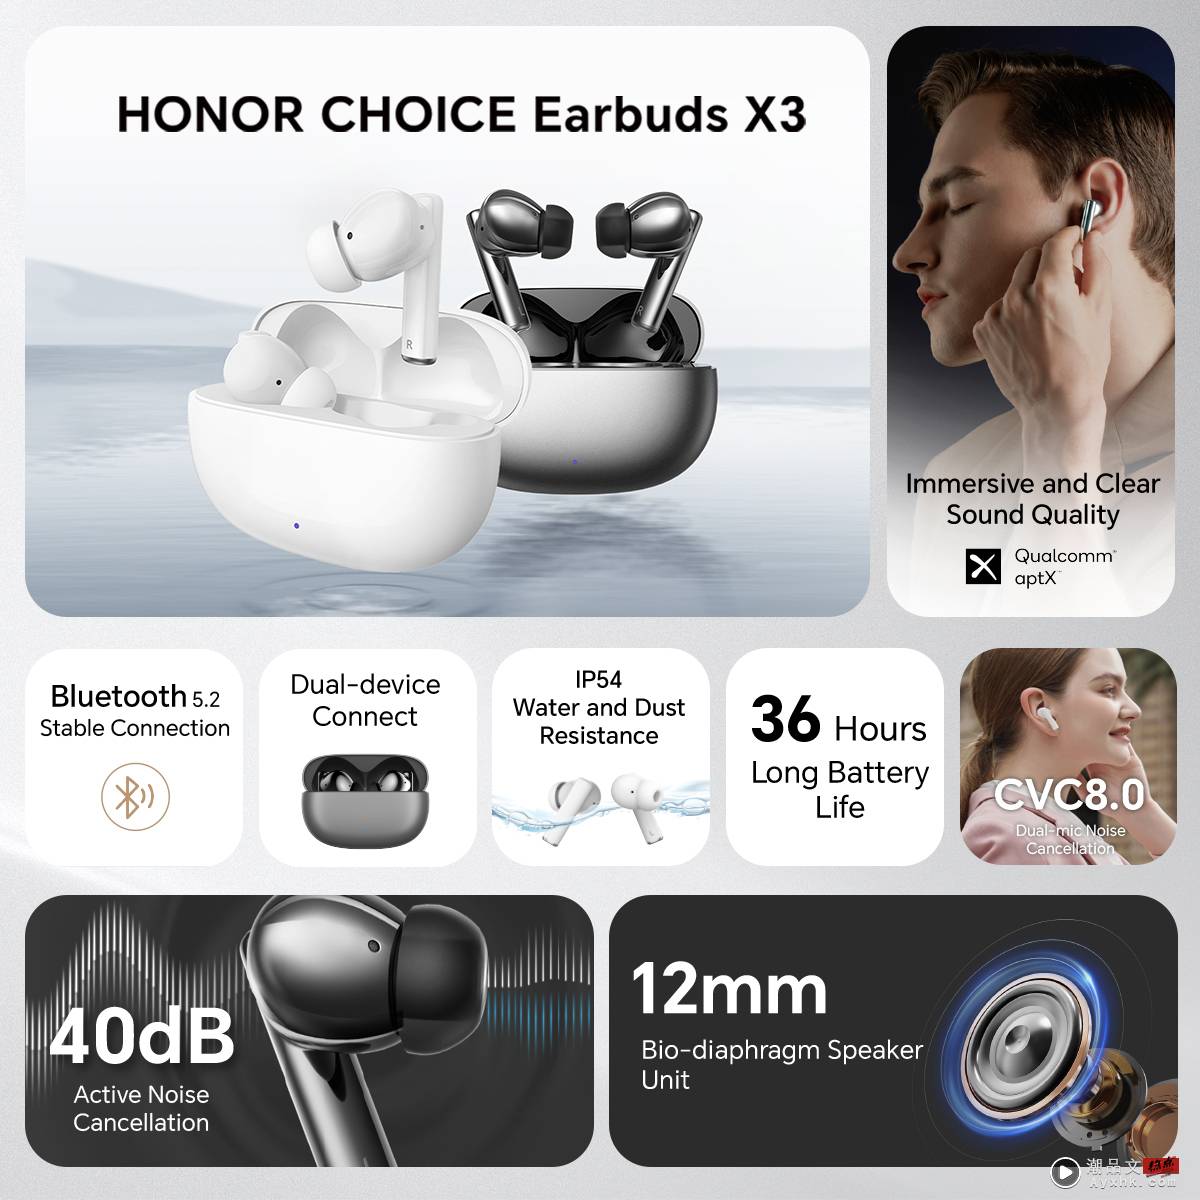 HONOR CHOICE Earbuds X3